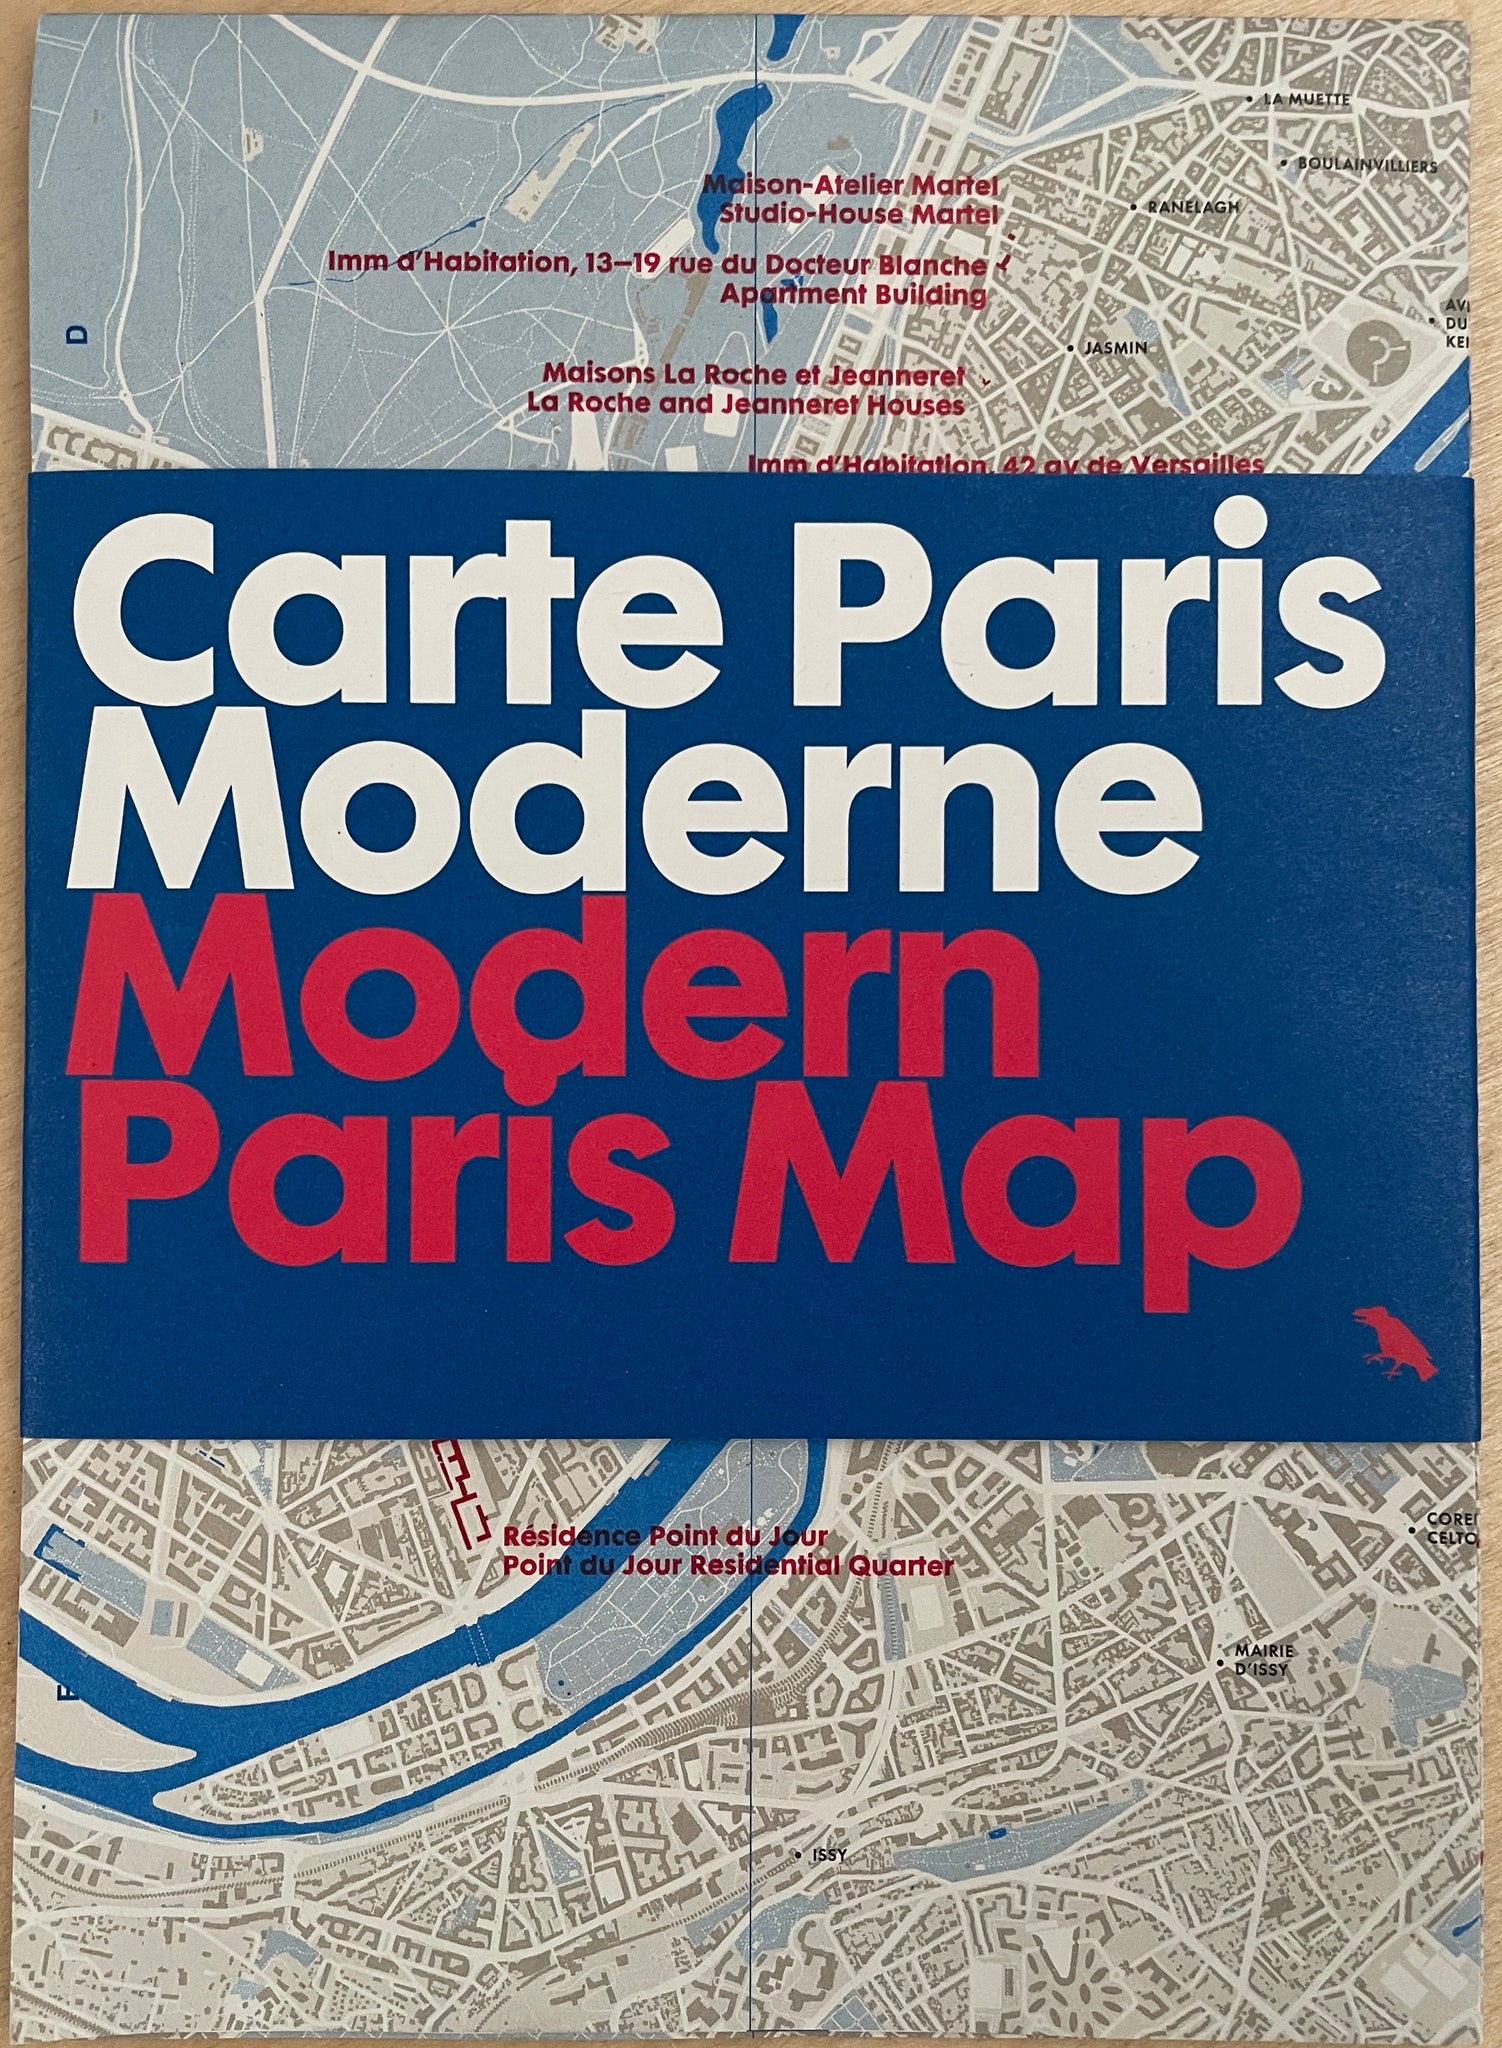 Modern Paris Map cover